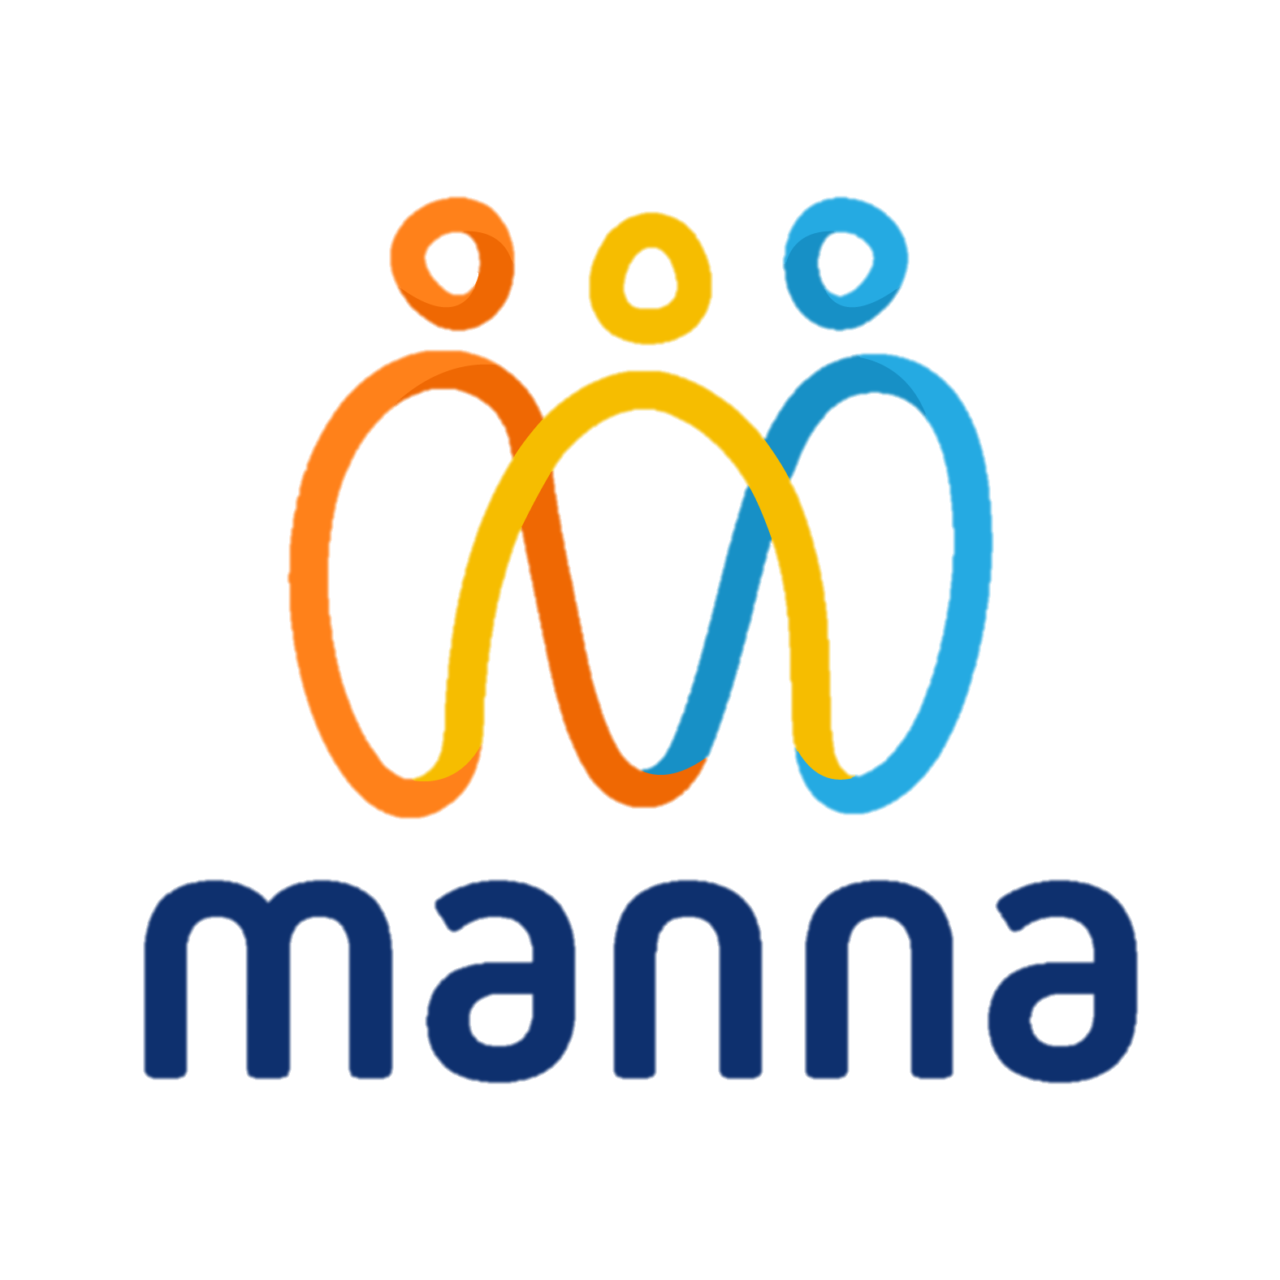 Zorggroep Manna